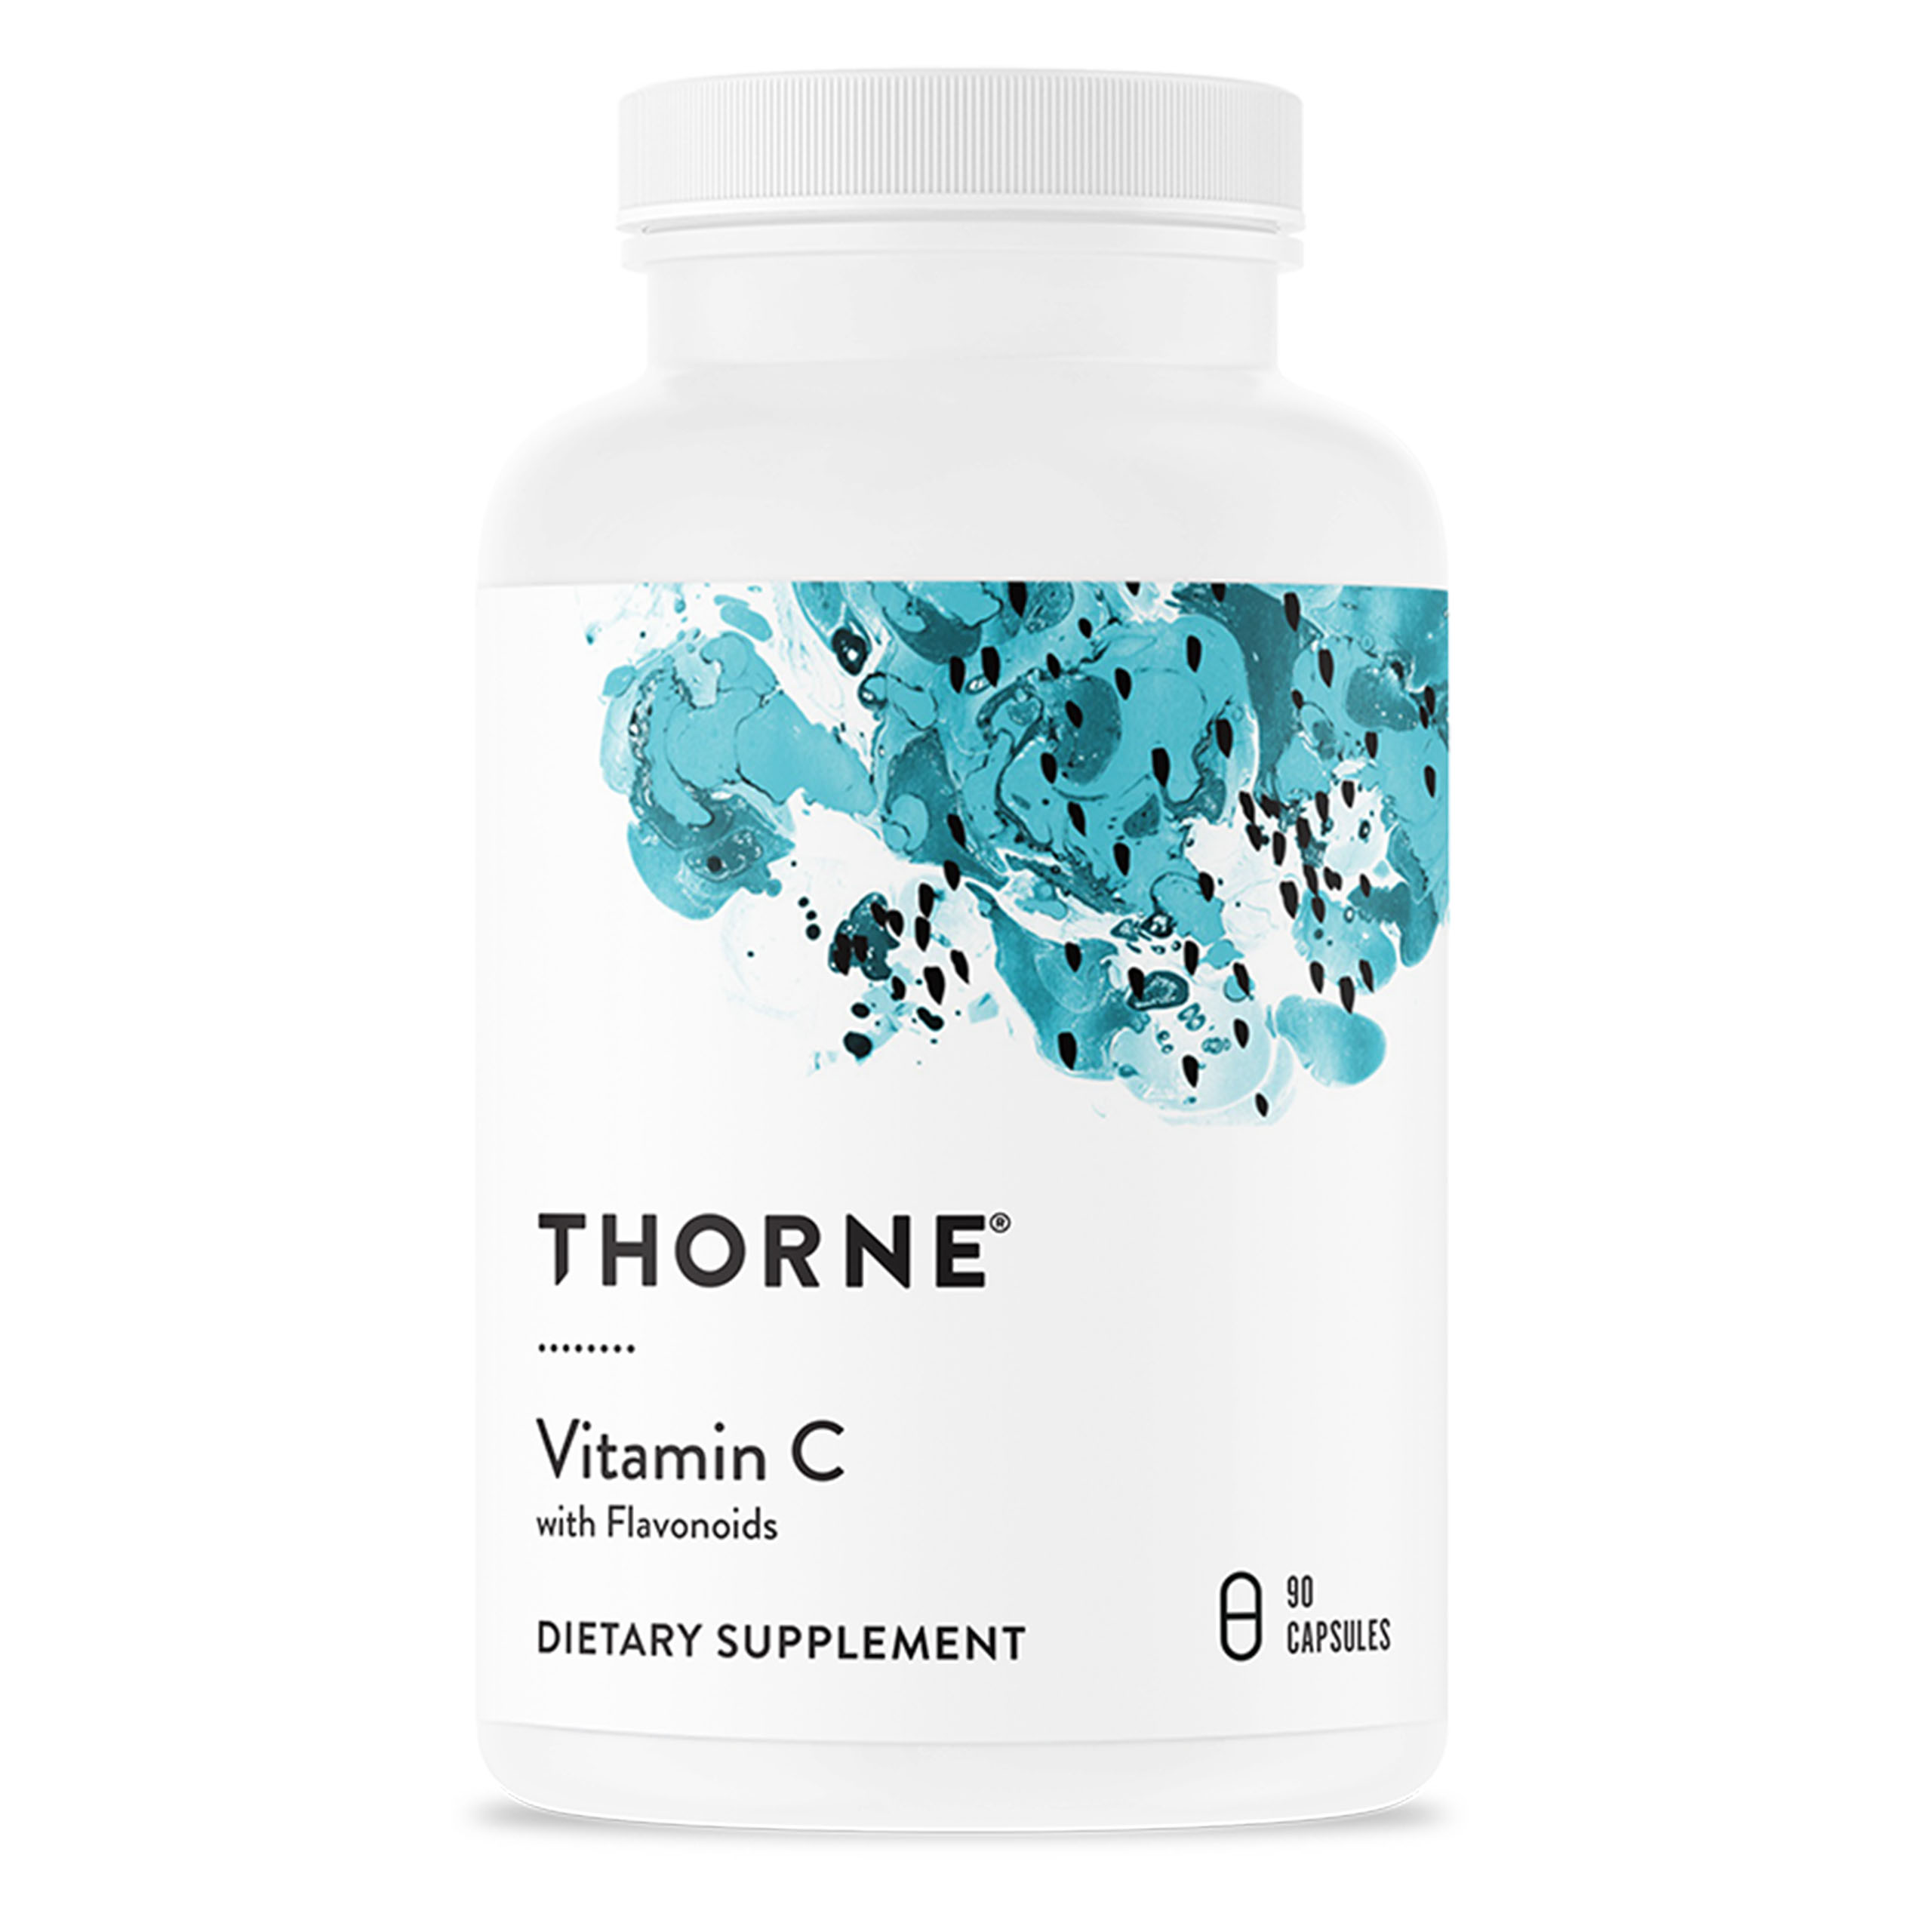 Thorne Vitamin C with Flavonoids   Promotes optimal immune function 90 caps - image 1 of 5